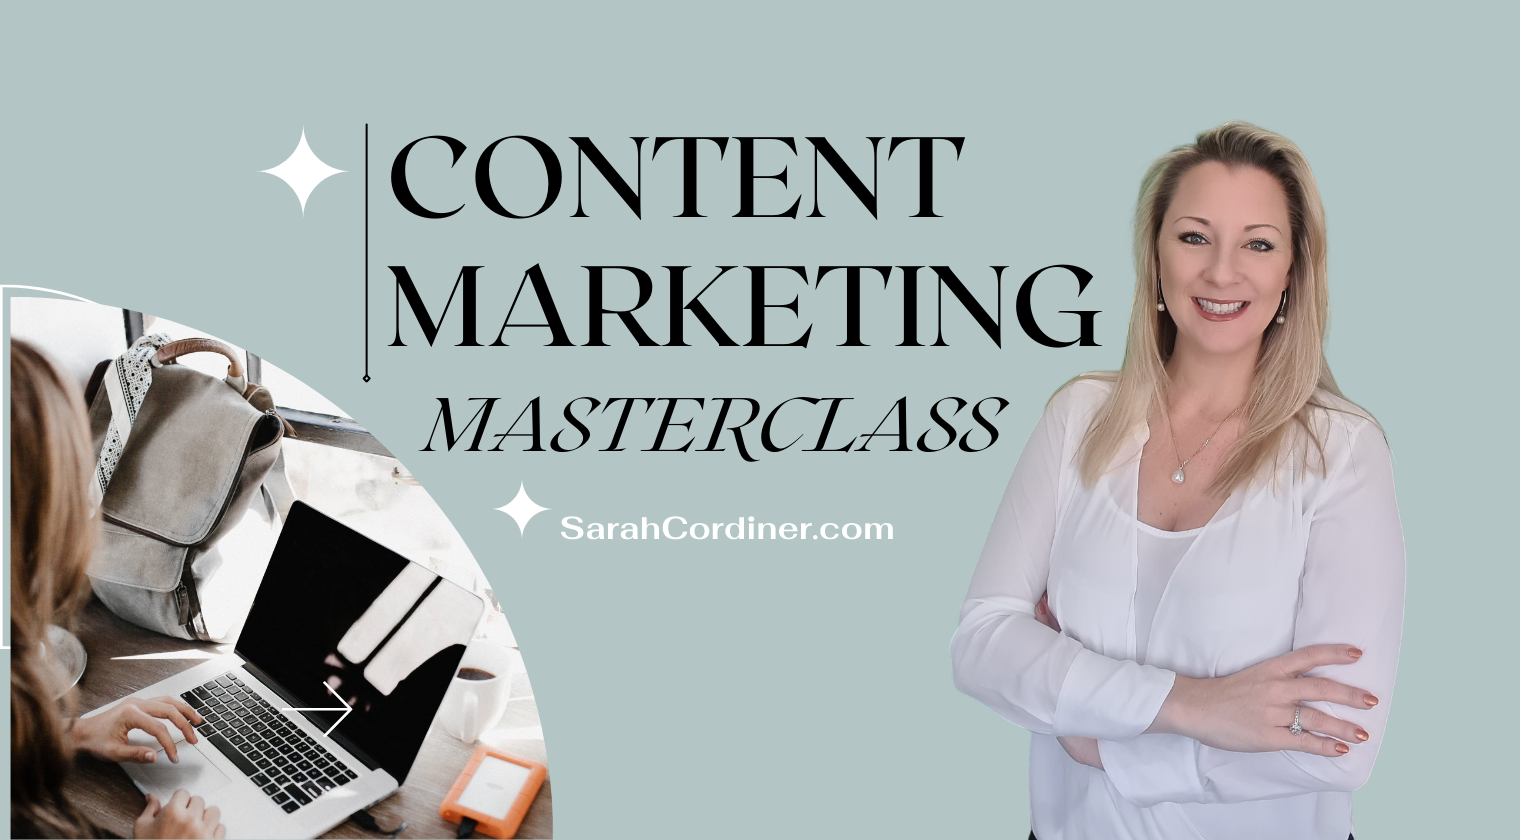 sarah cordiner content marketig masterclass course